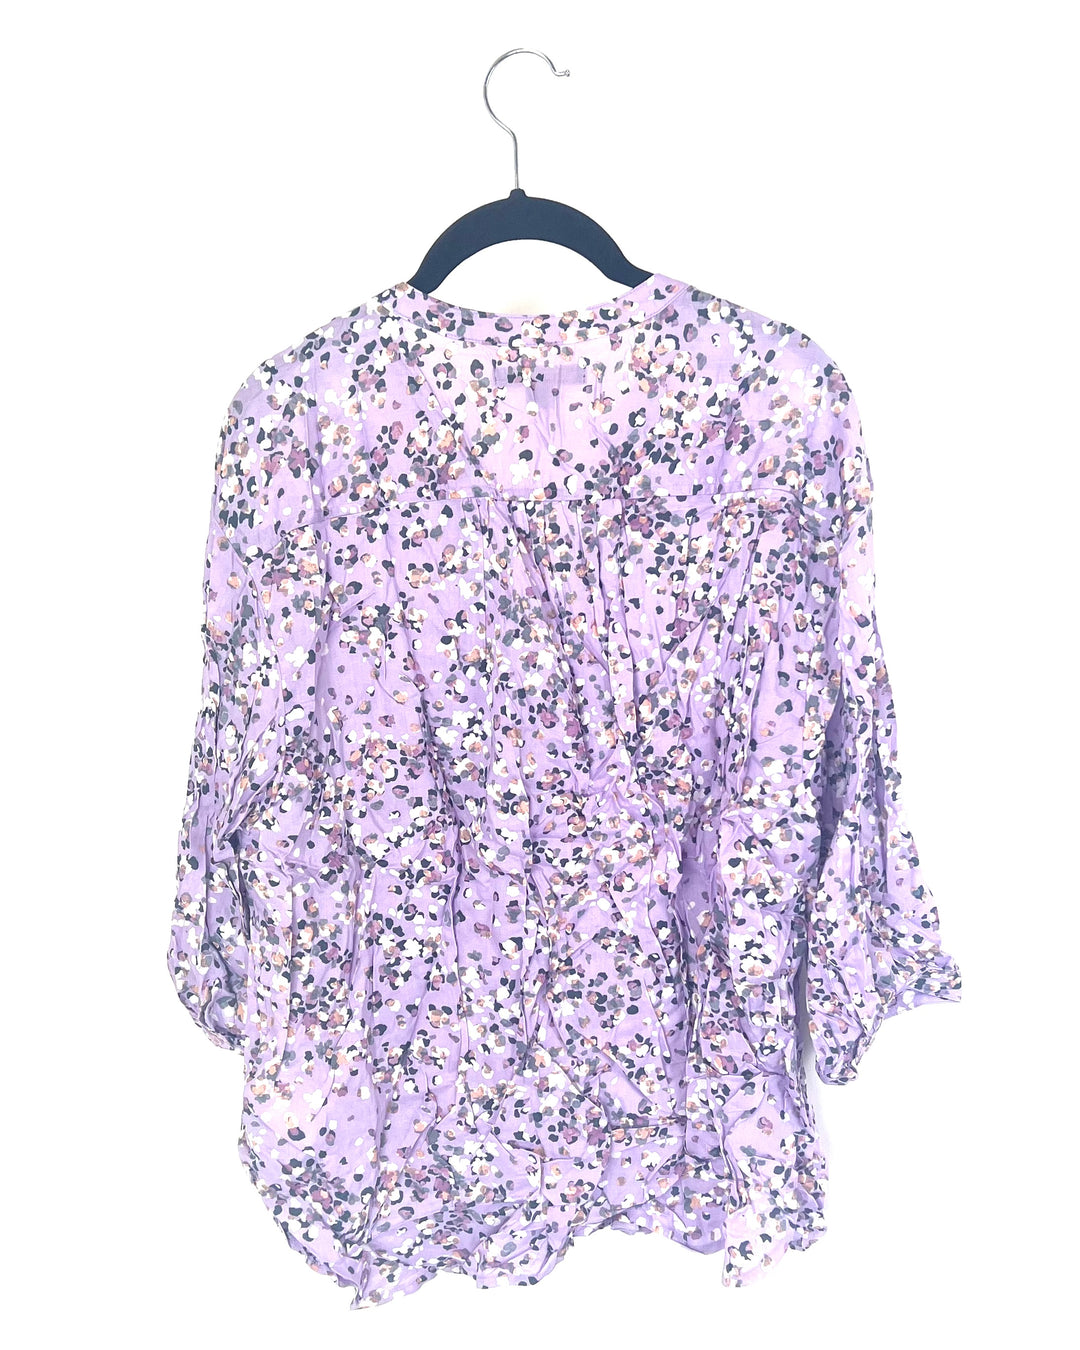 Purple Floral Cropped Sleeve Sleepwear Top - Size 4/6